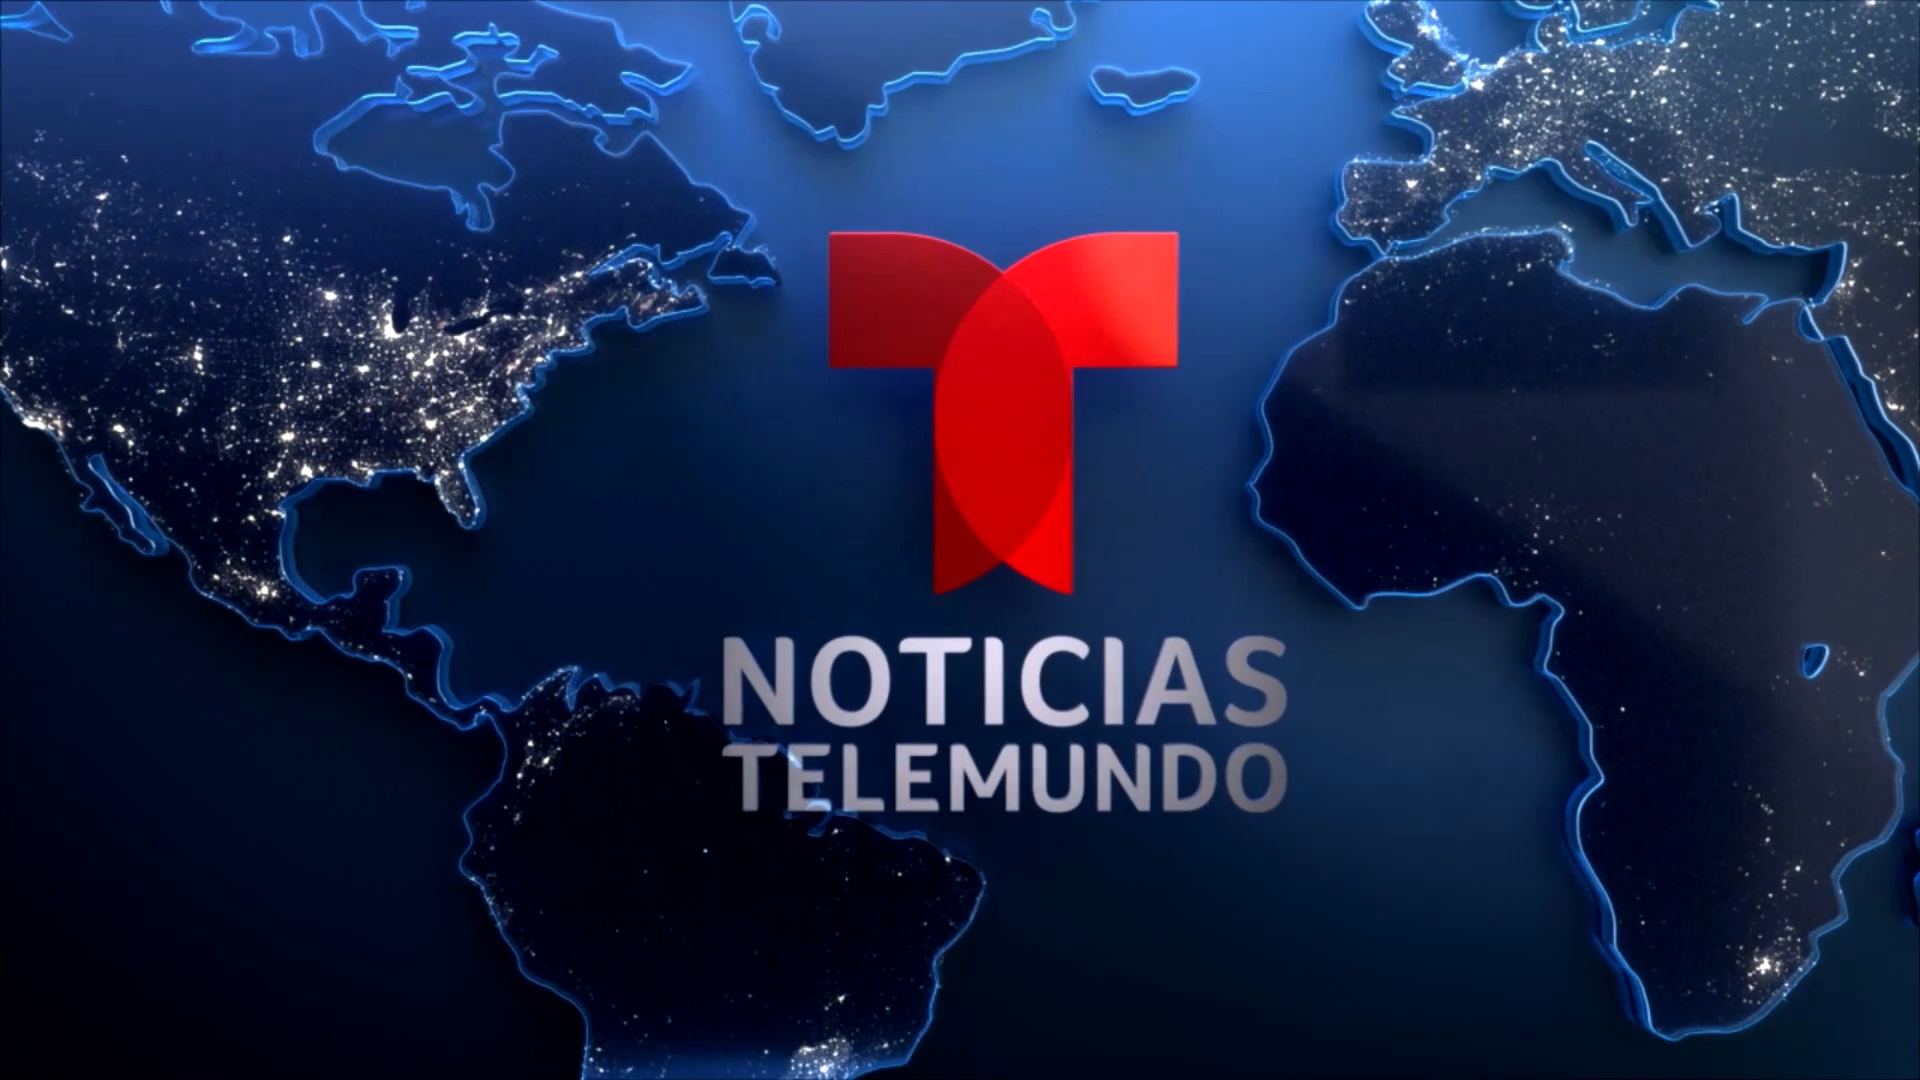 Noticias Telemundo